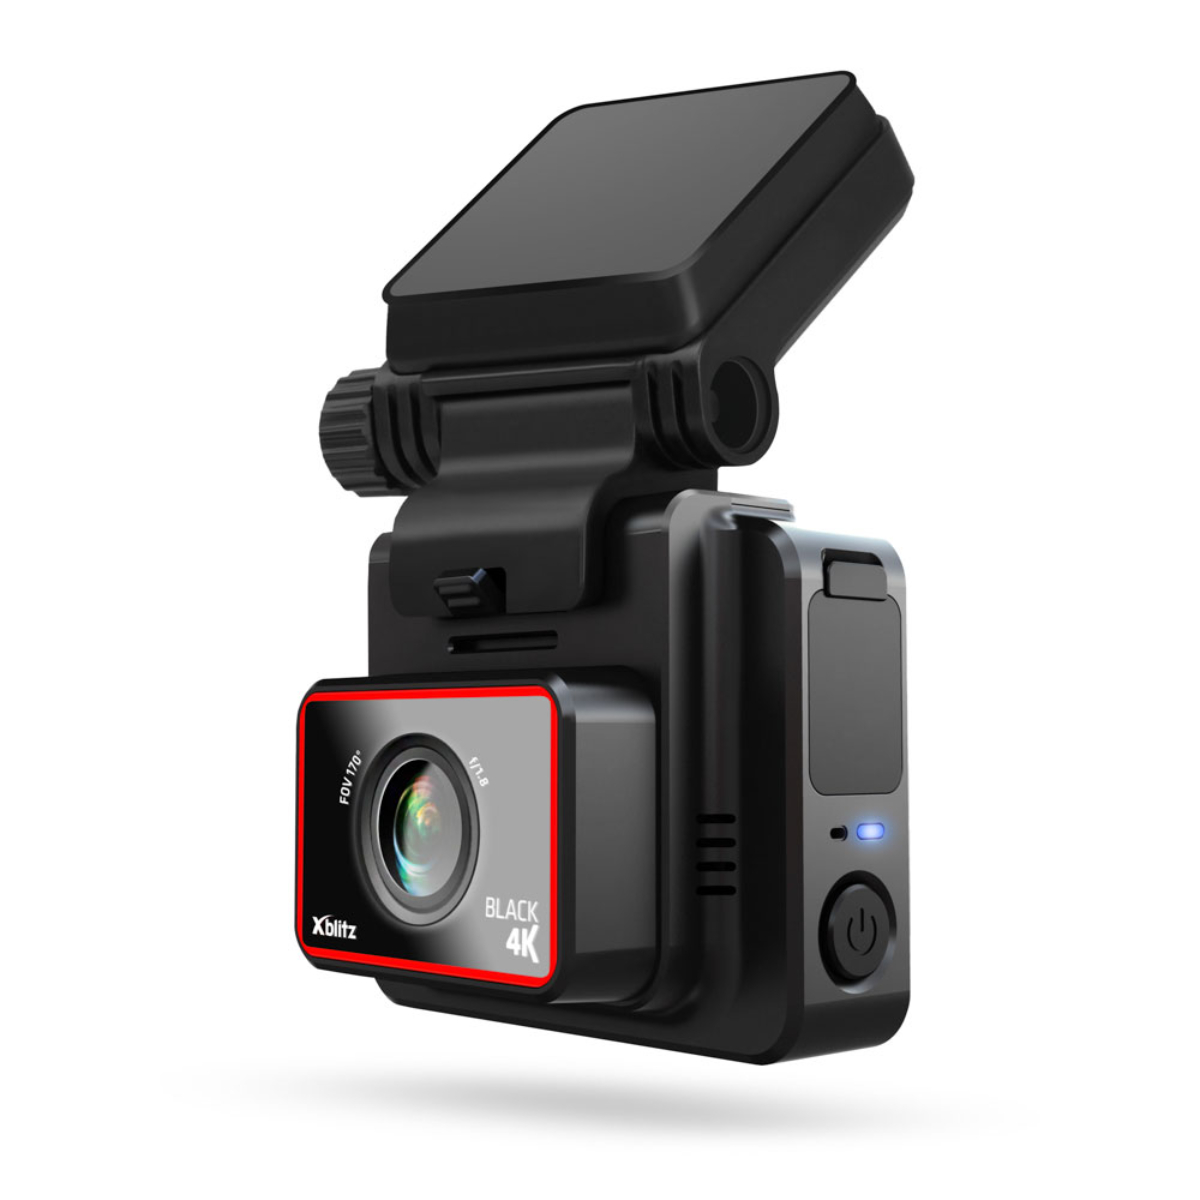 4K Black Dashcam XBLITZ Display